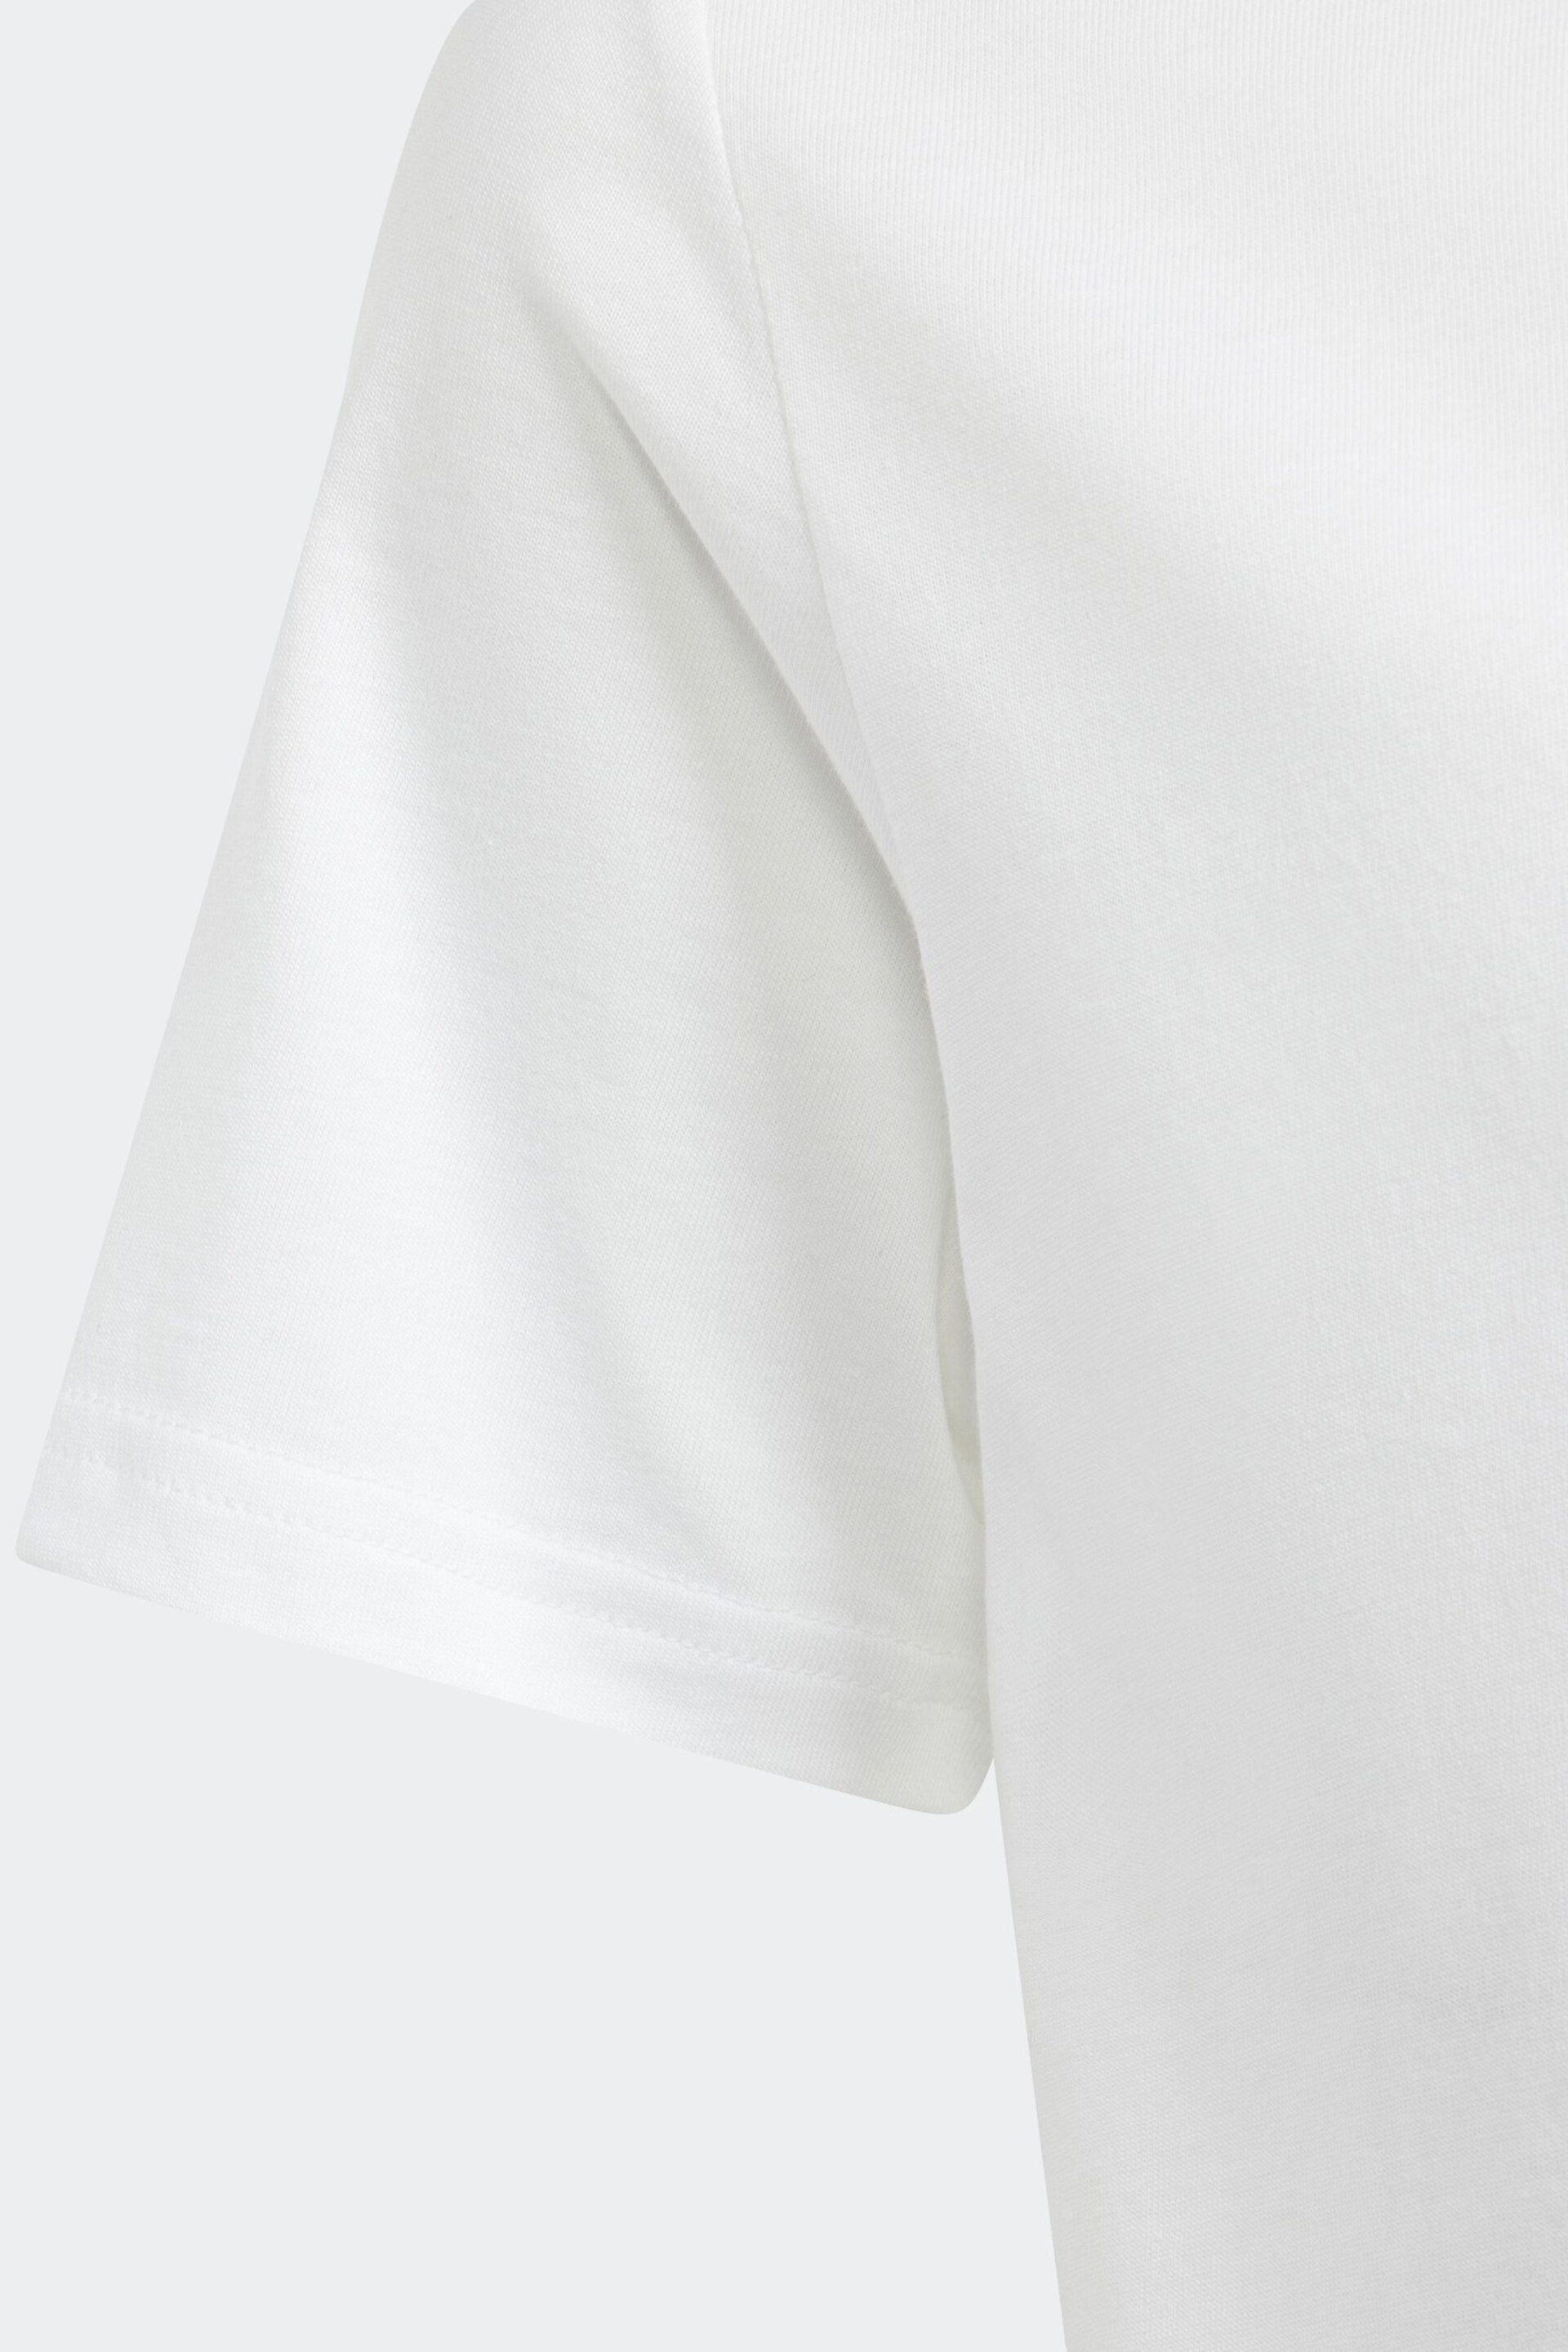 adidas White Sportswear Essentials Small Logo Cotton T-Shirt - Image 5 of 6